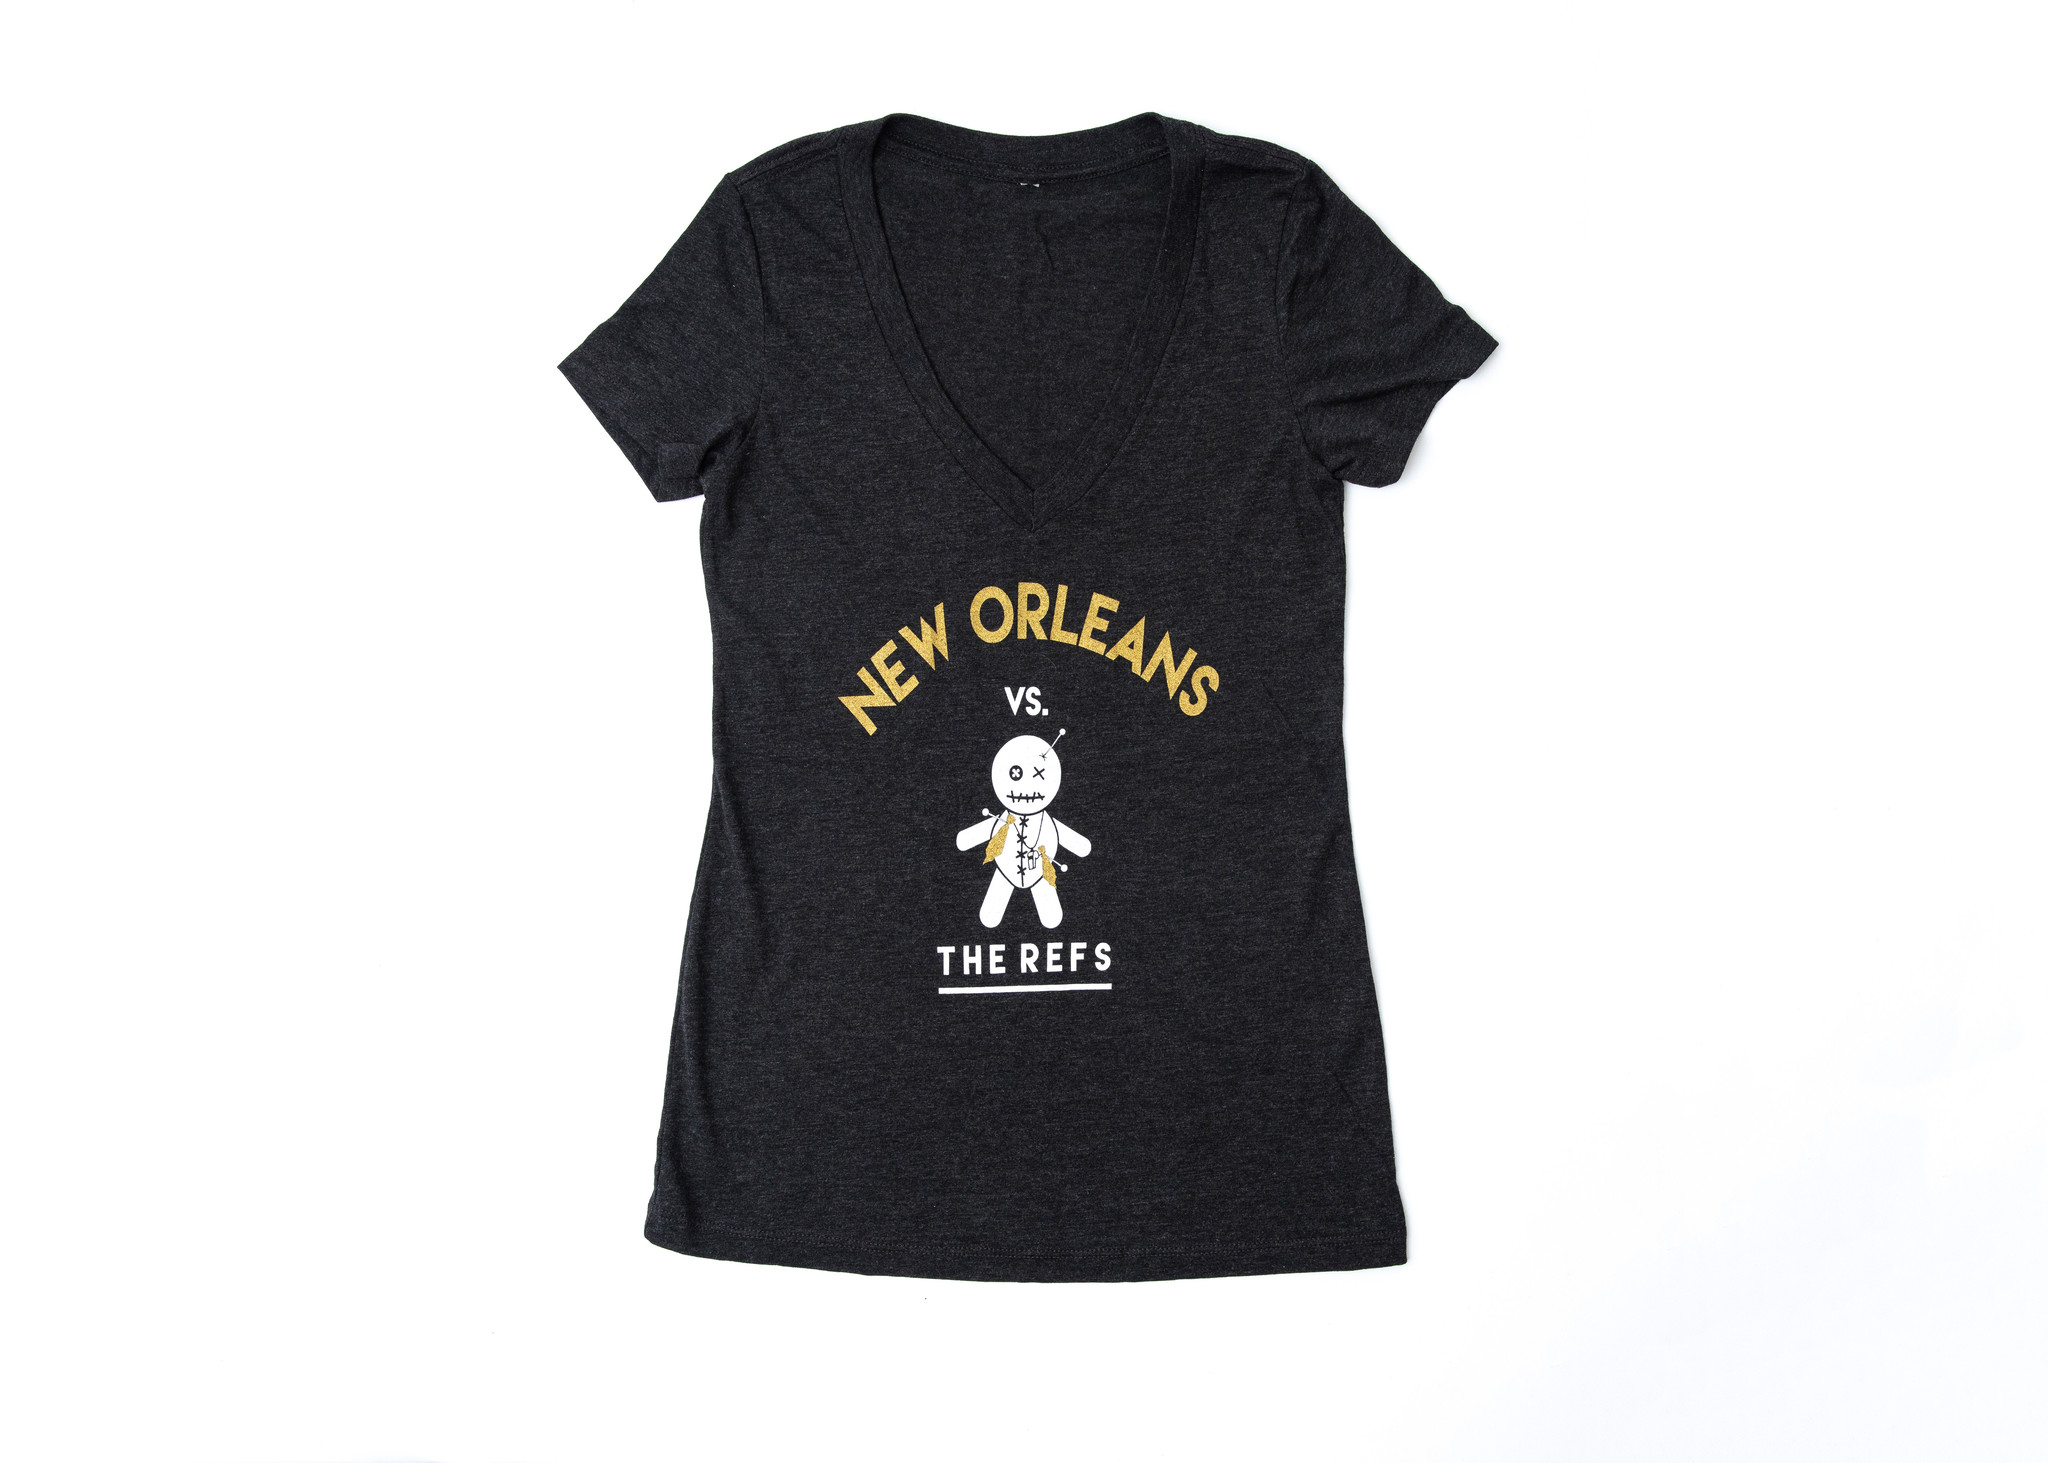 new orleans shirt shops